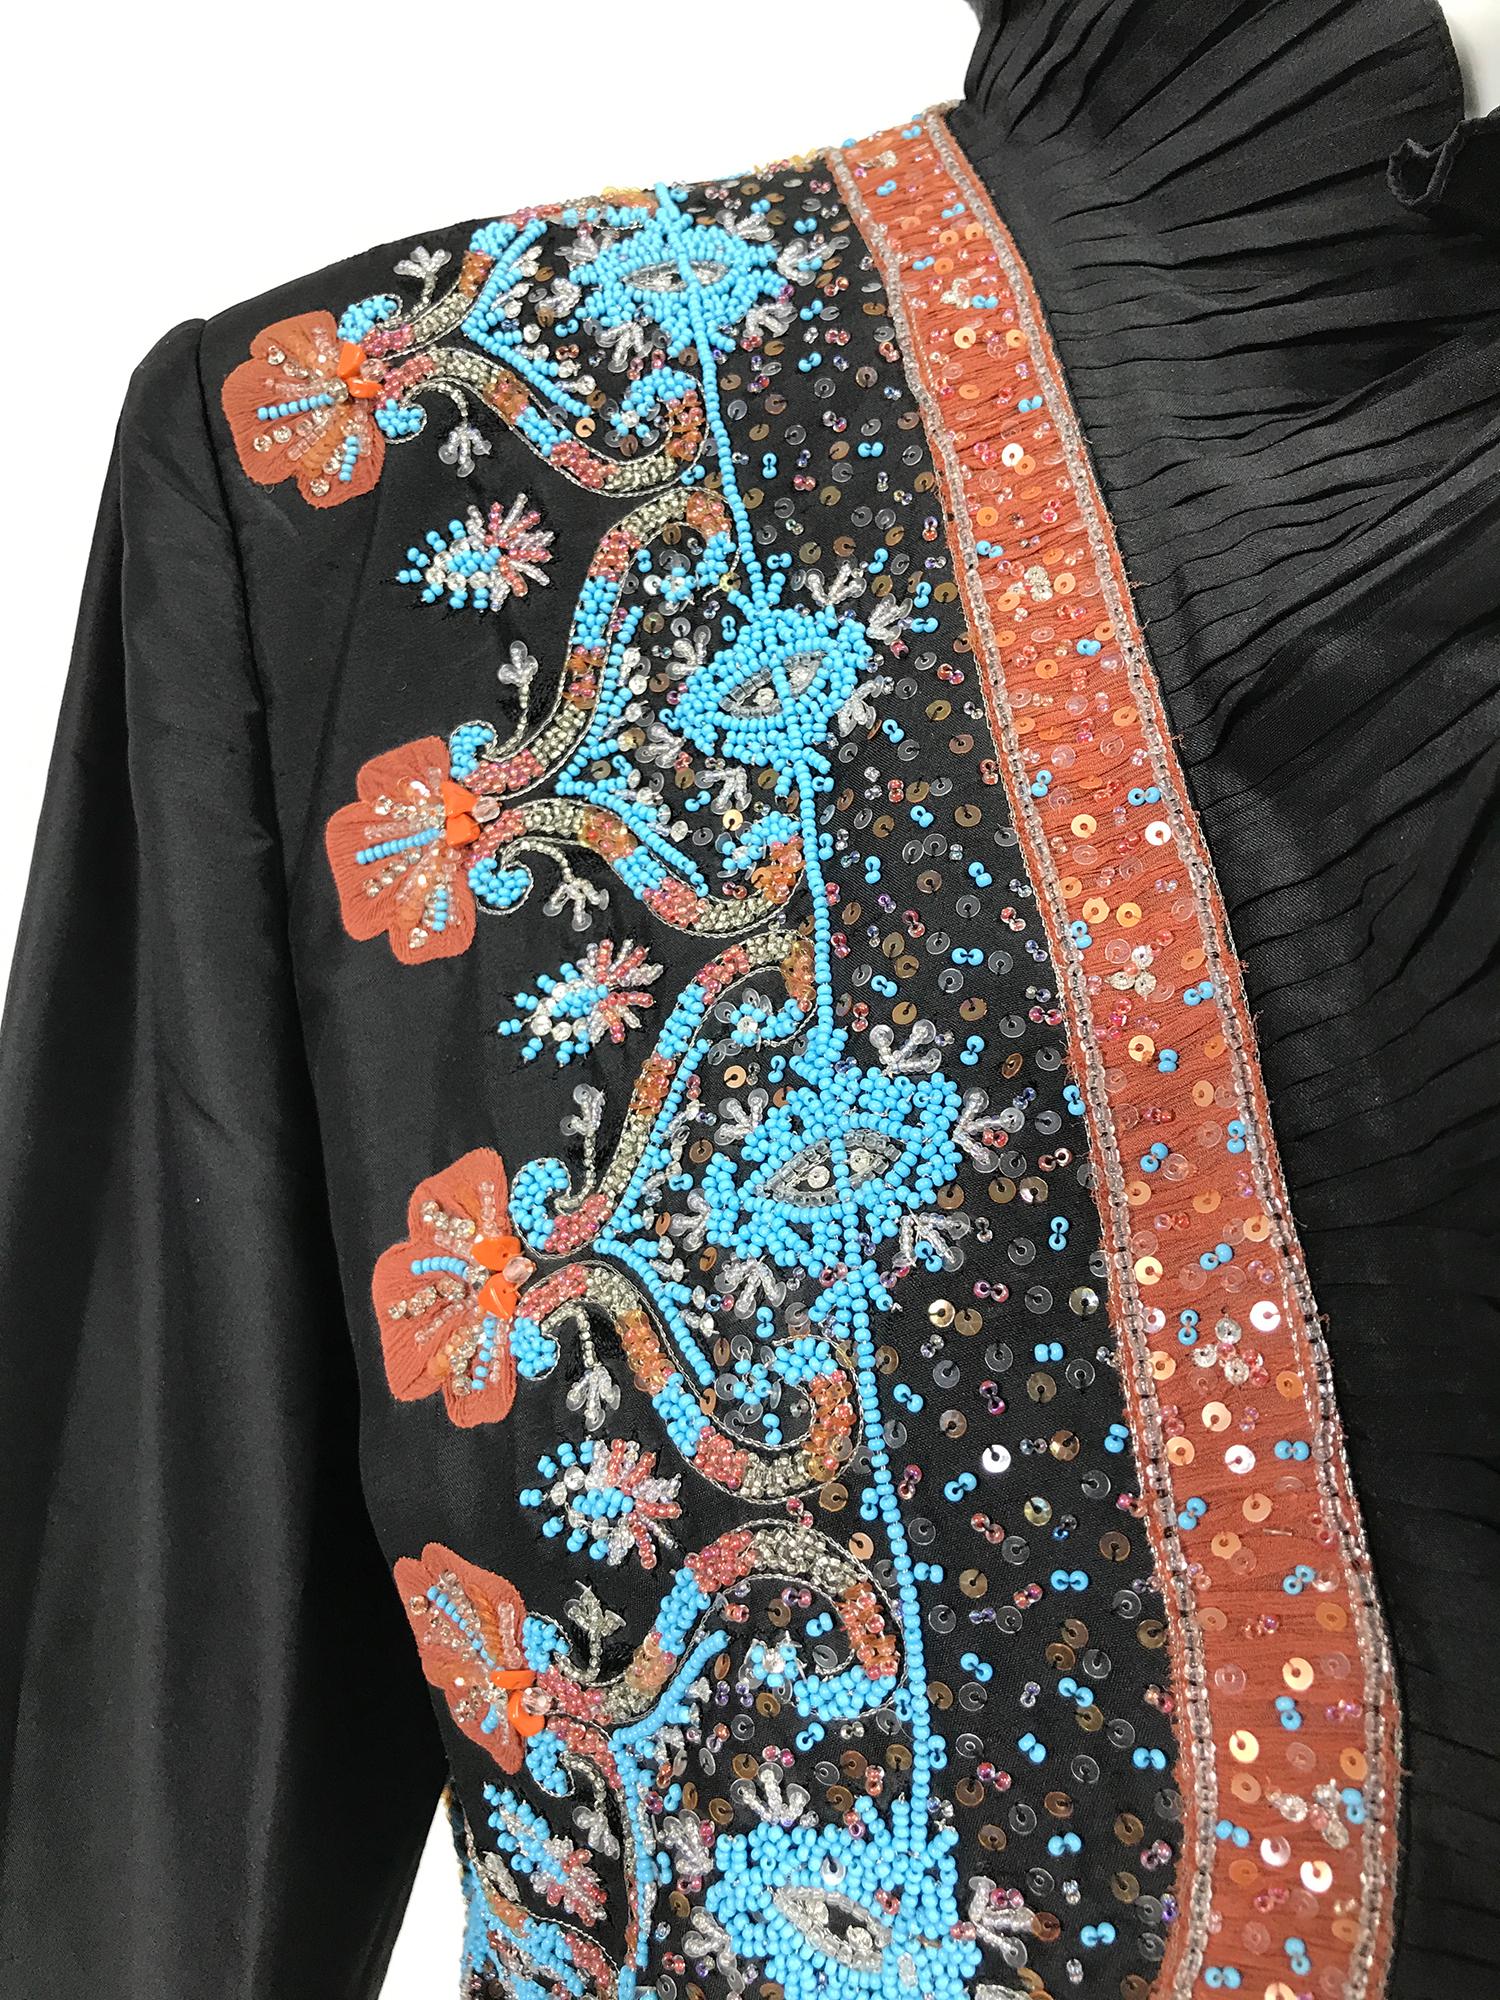 Mary Ann Restivo Embroidered Black Silk Taffeta Bolero Jacket  For Sale 2